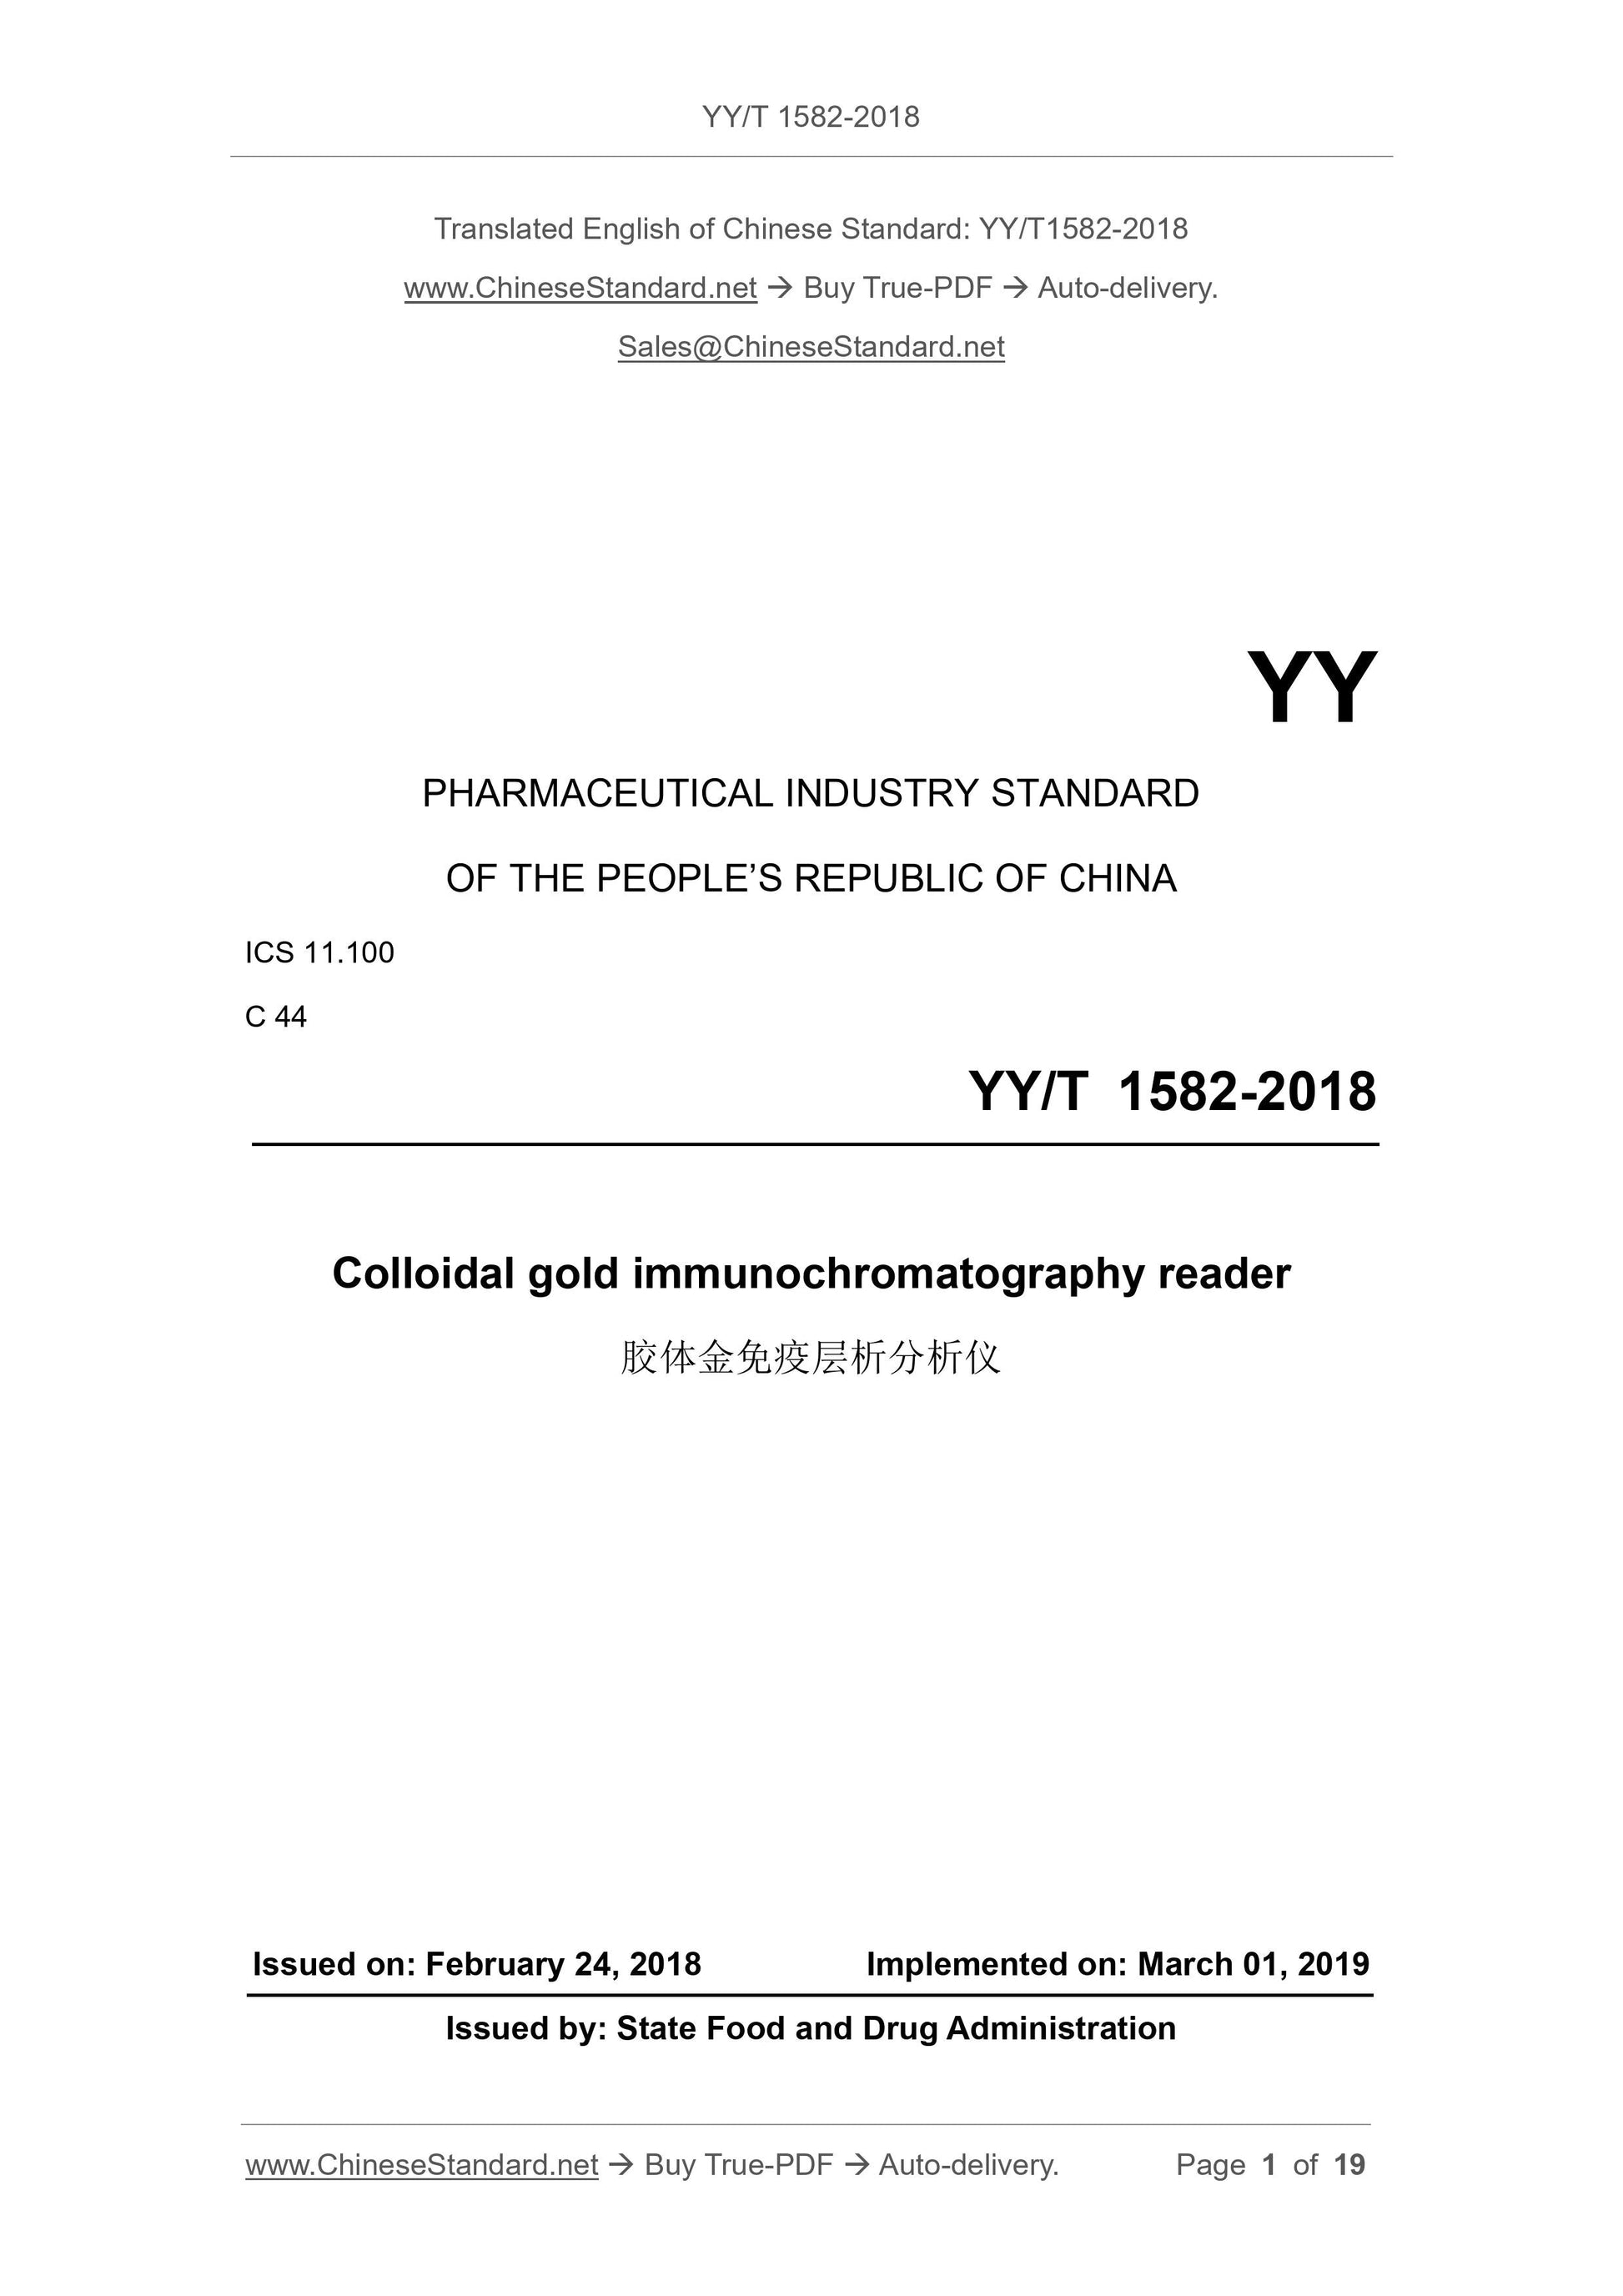 YY/T 1582-2018 Page 1